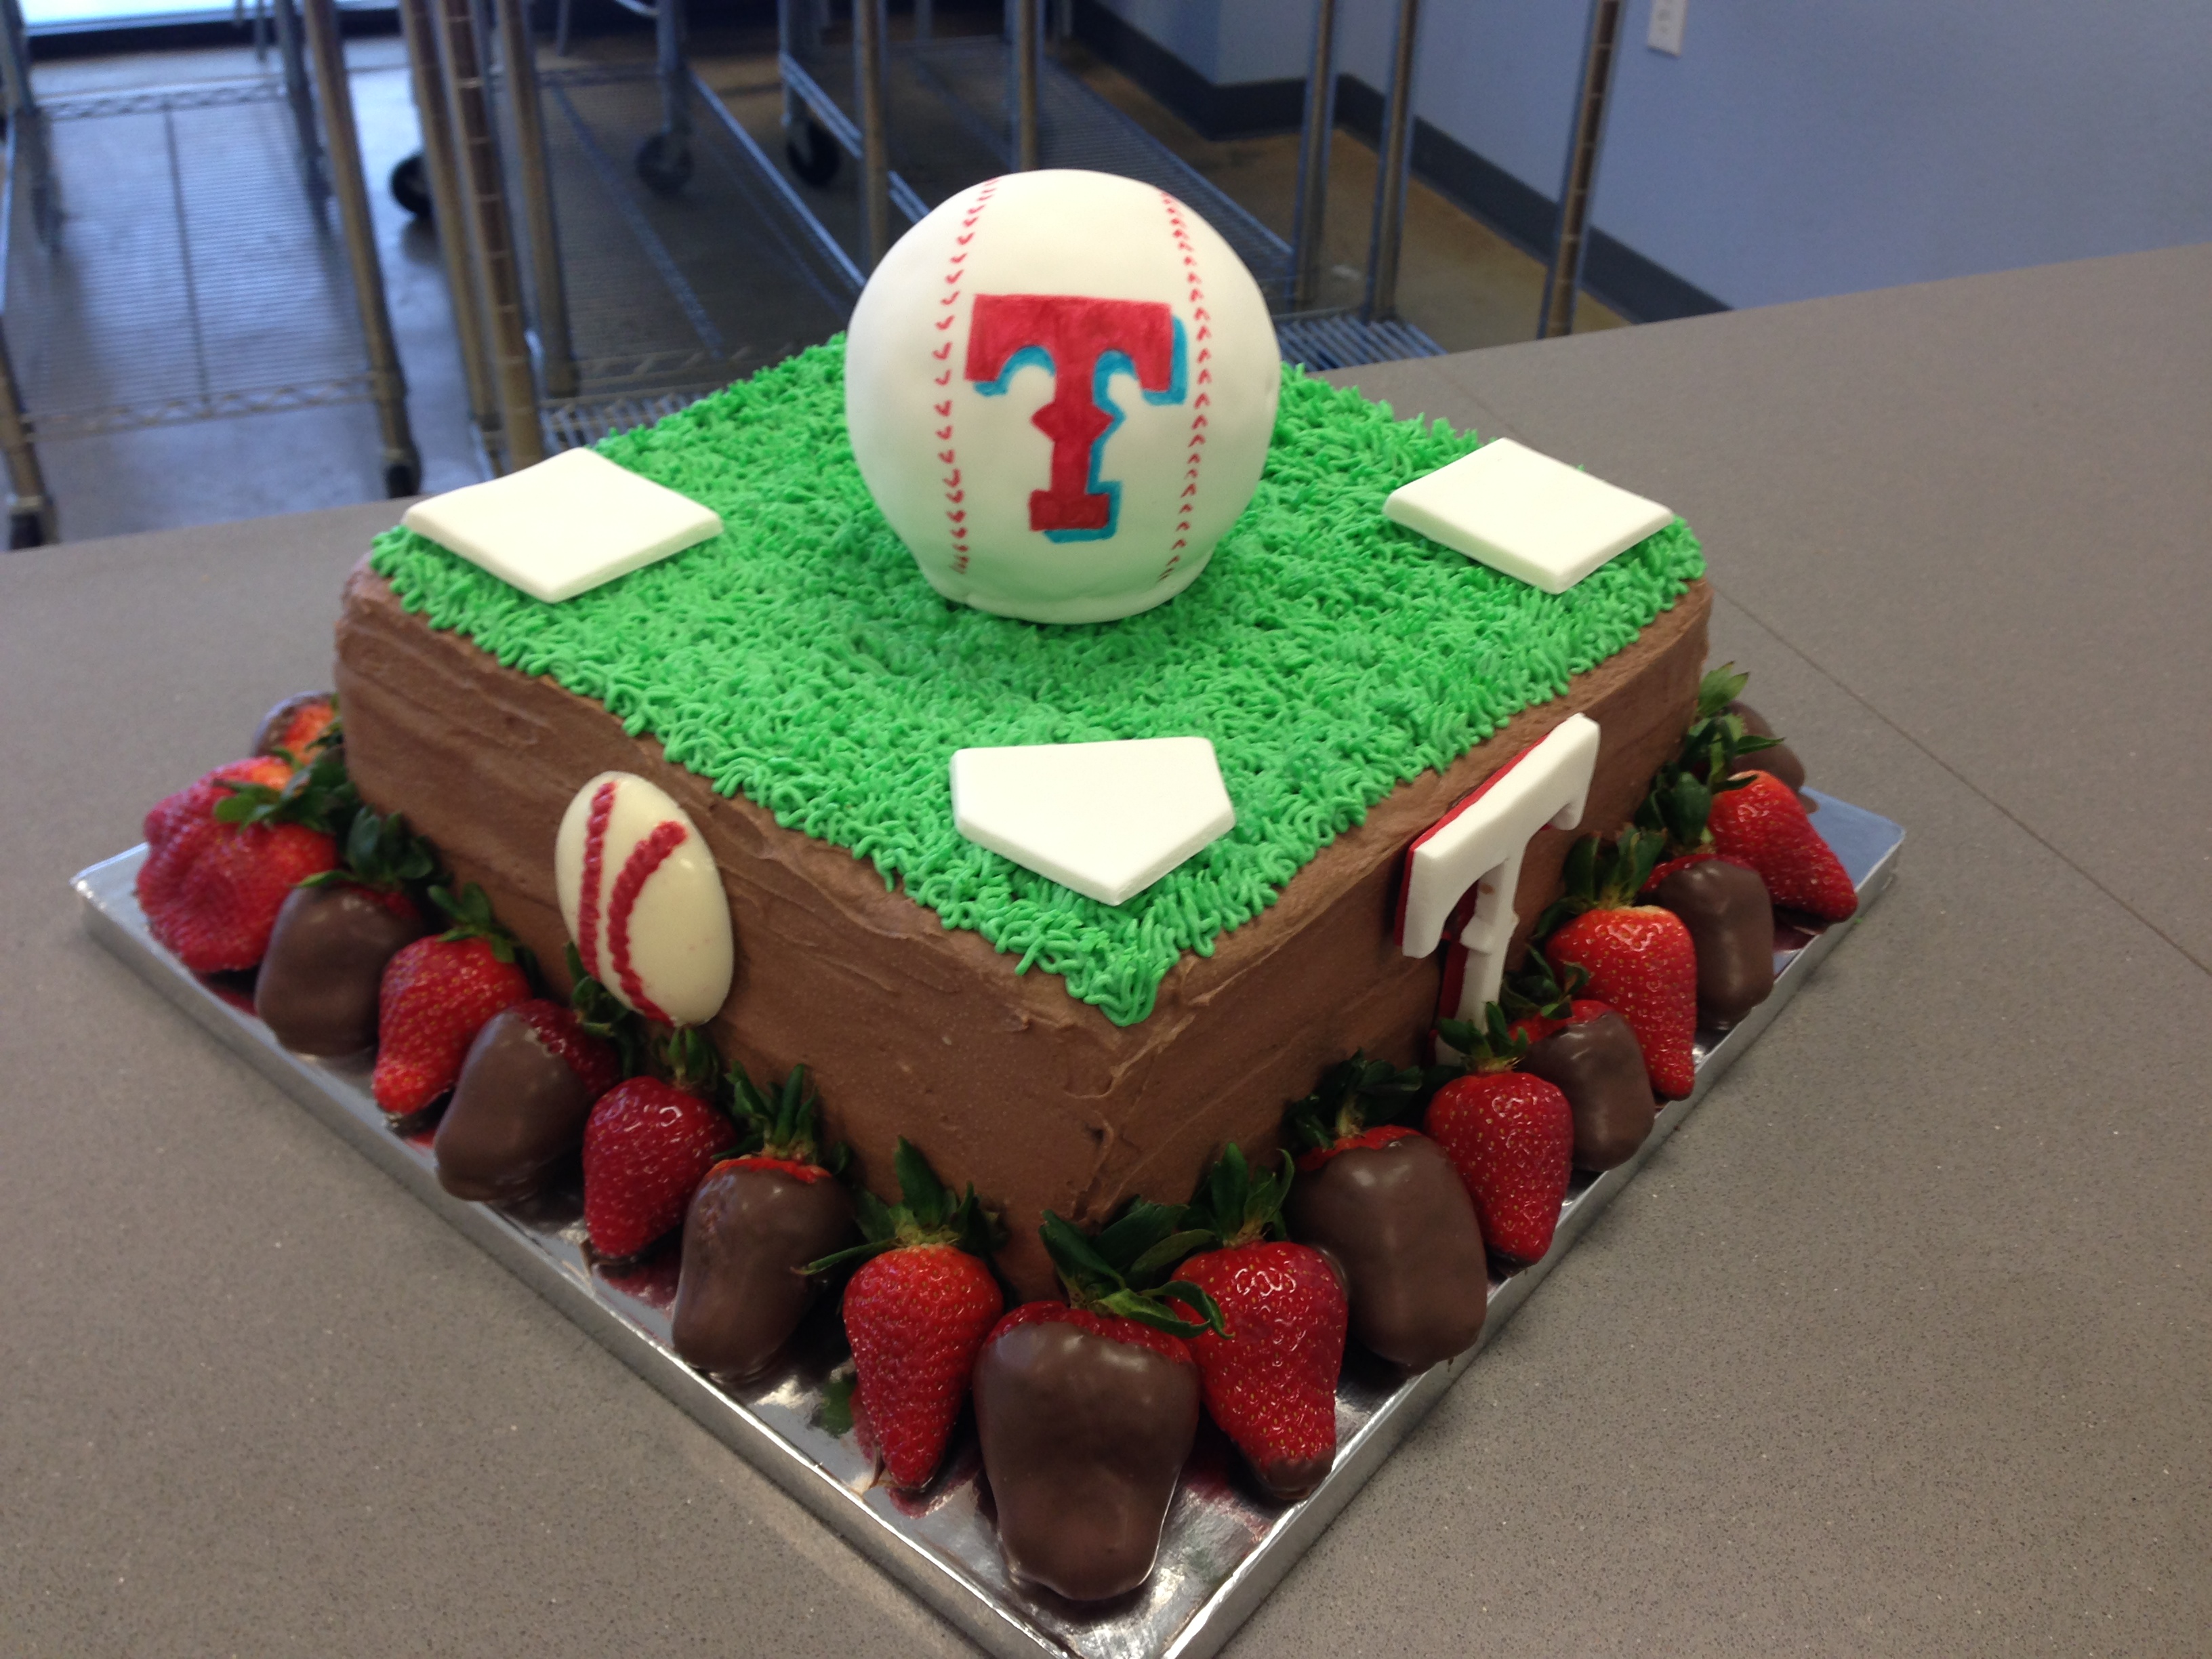 Texas Rangers Cake